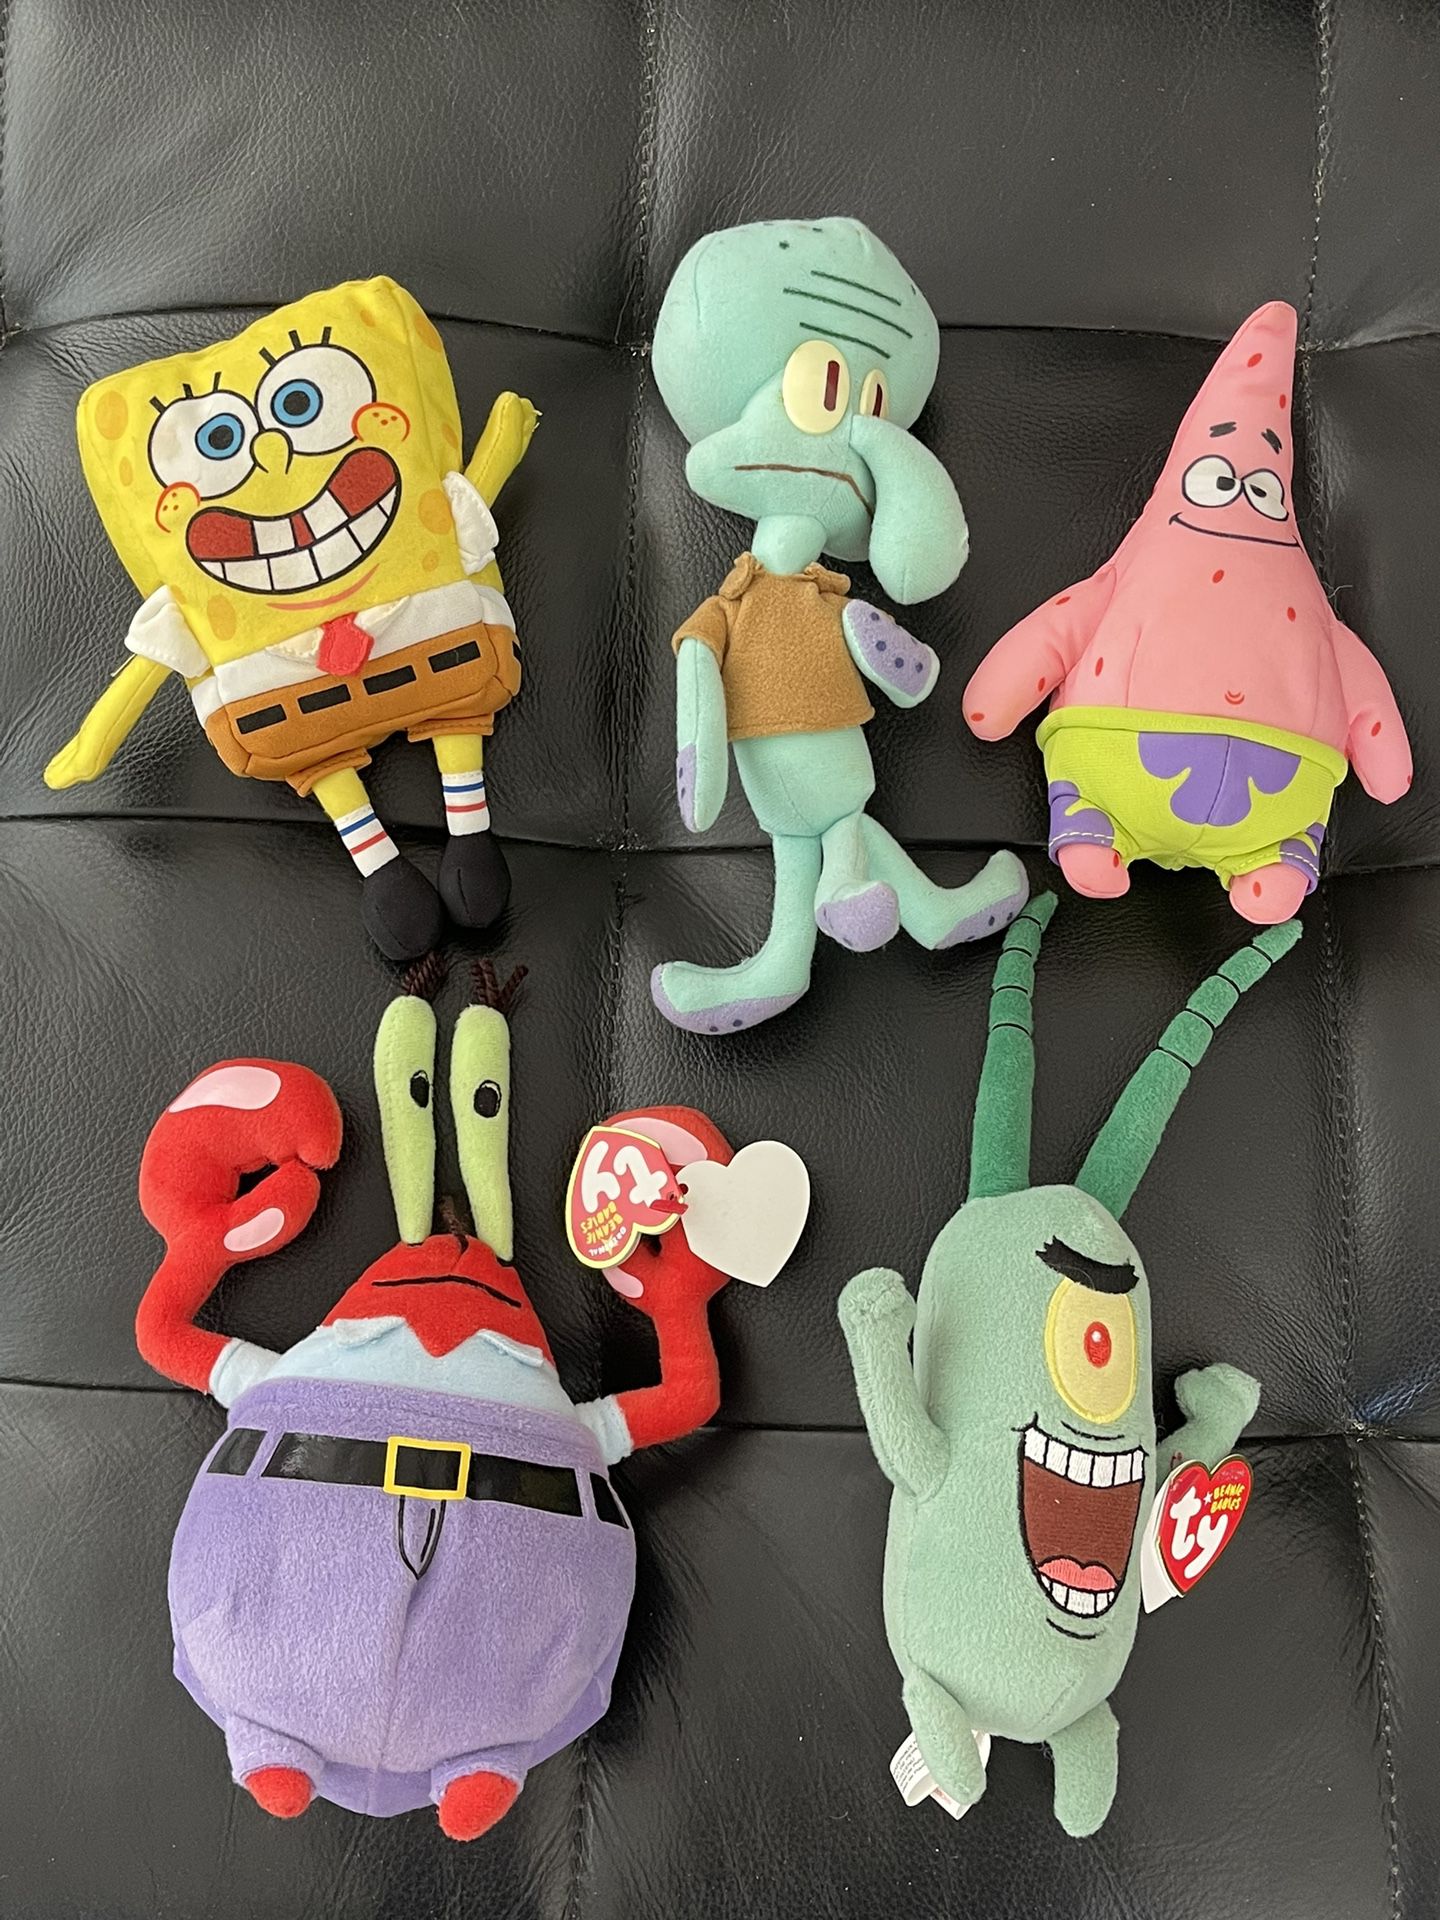 spongebob squarepants characters as babies